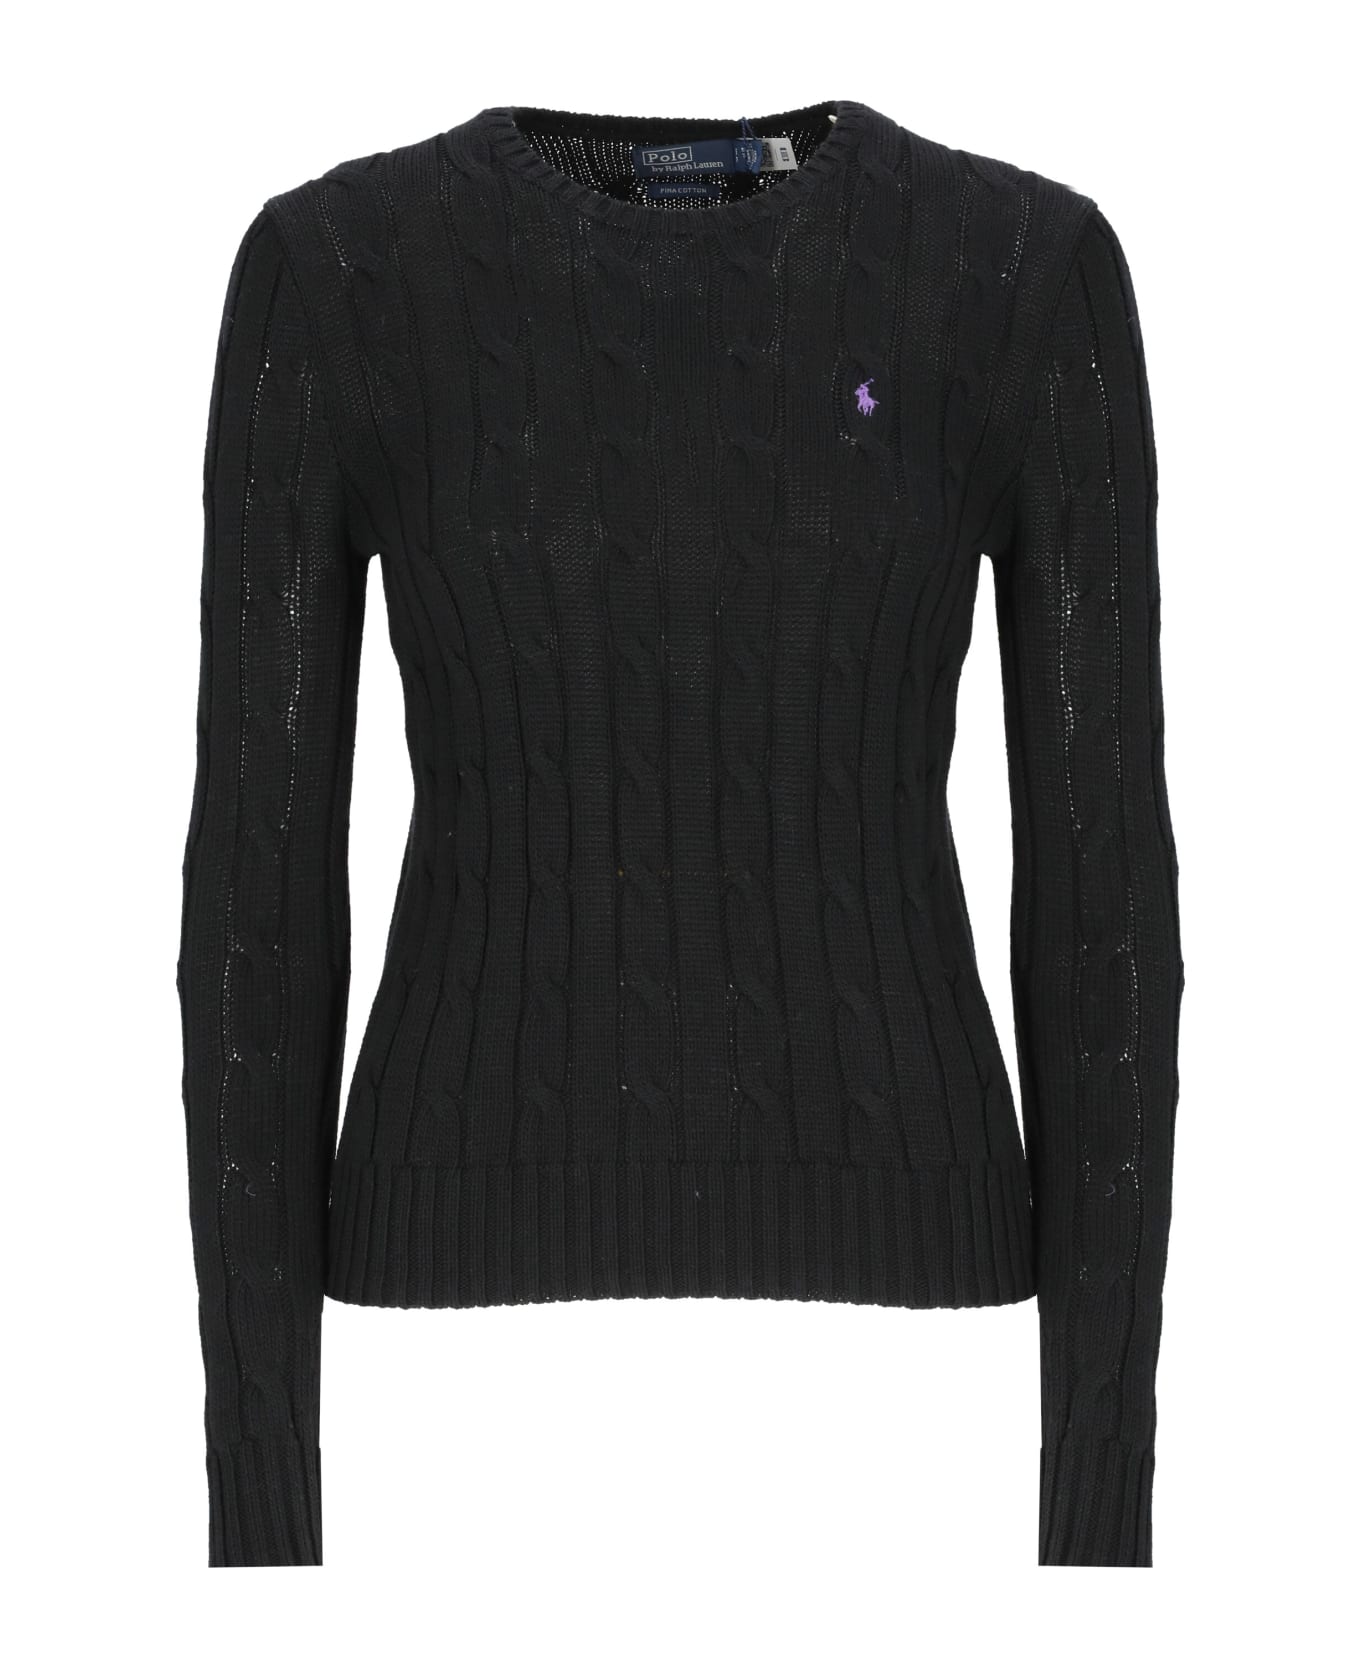 Ralph Lauren Sweater With Pony - Black